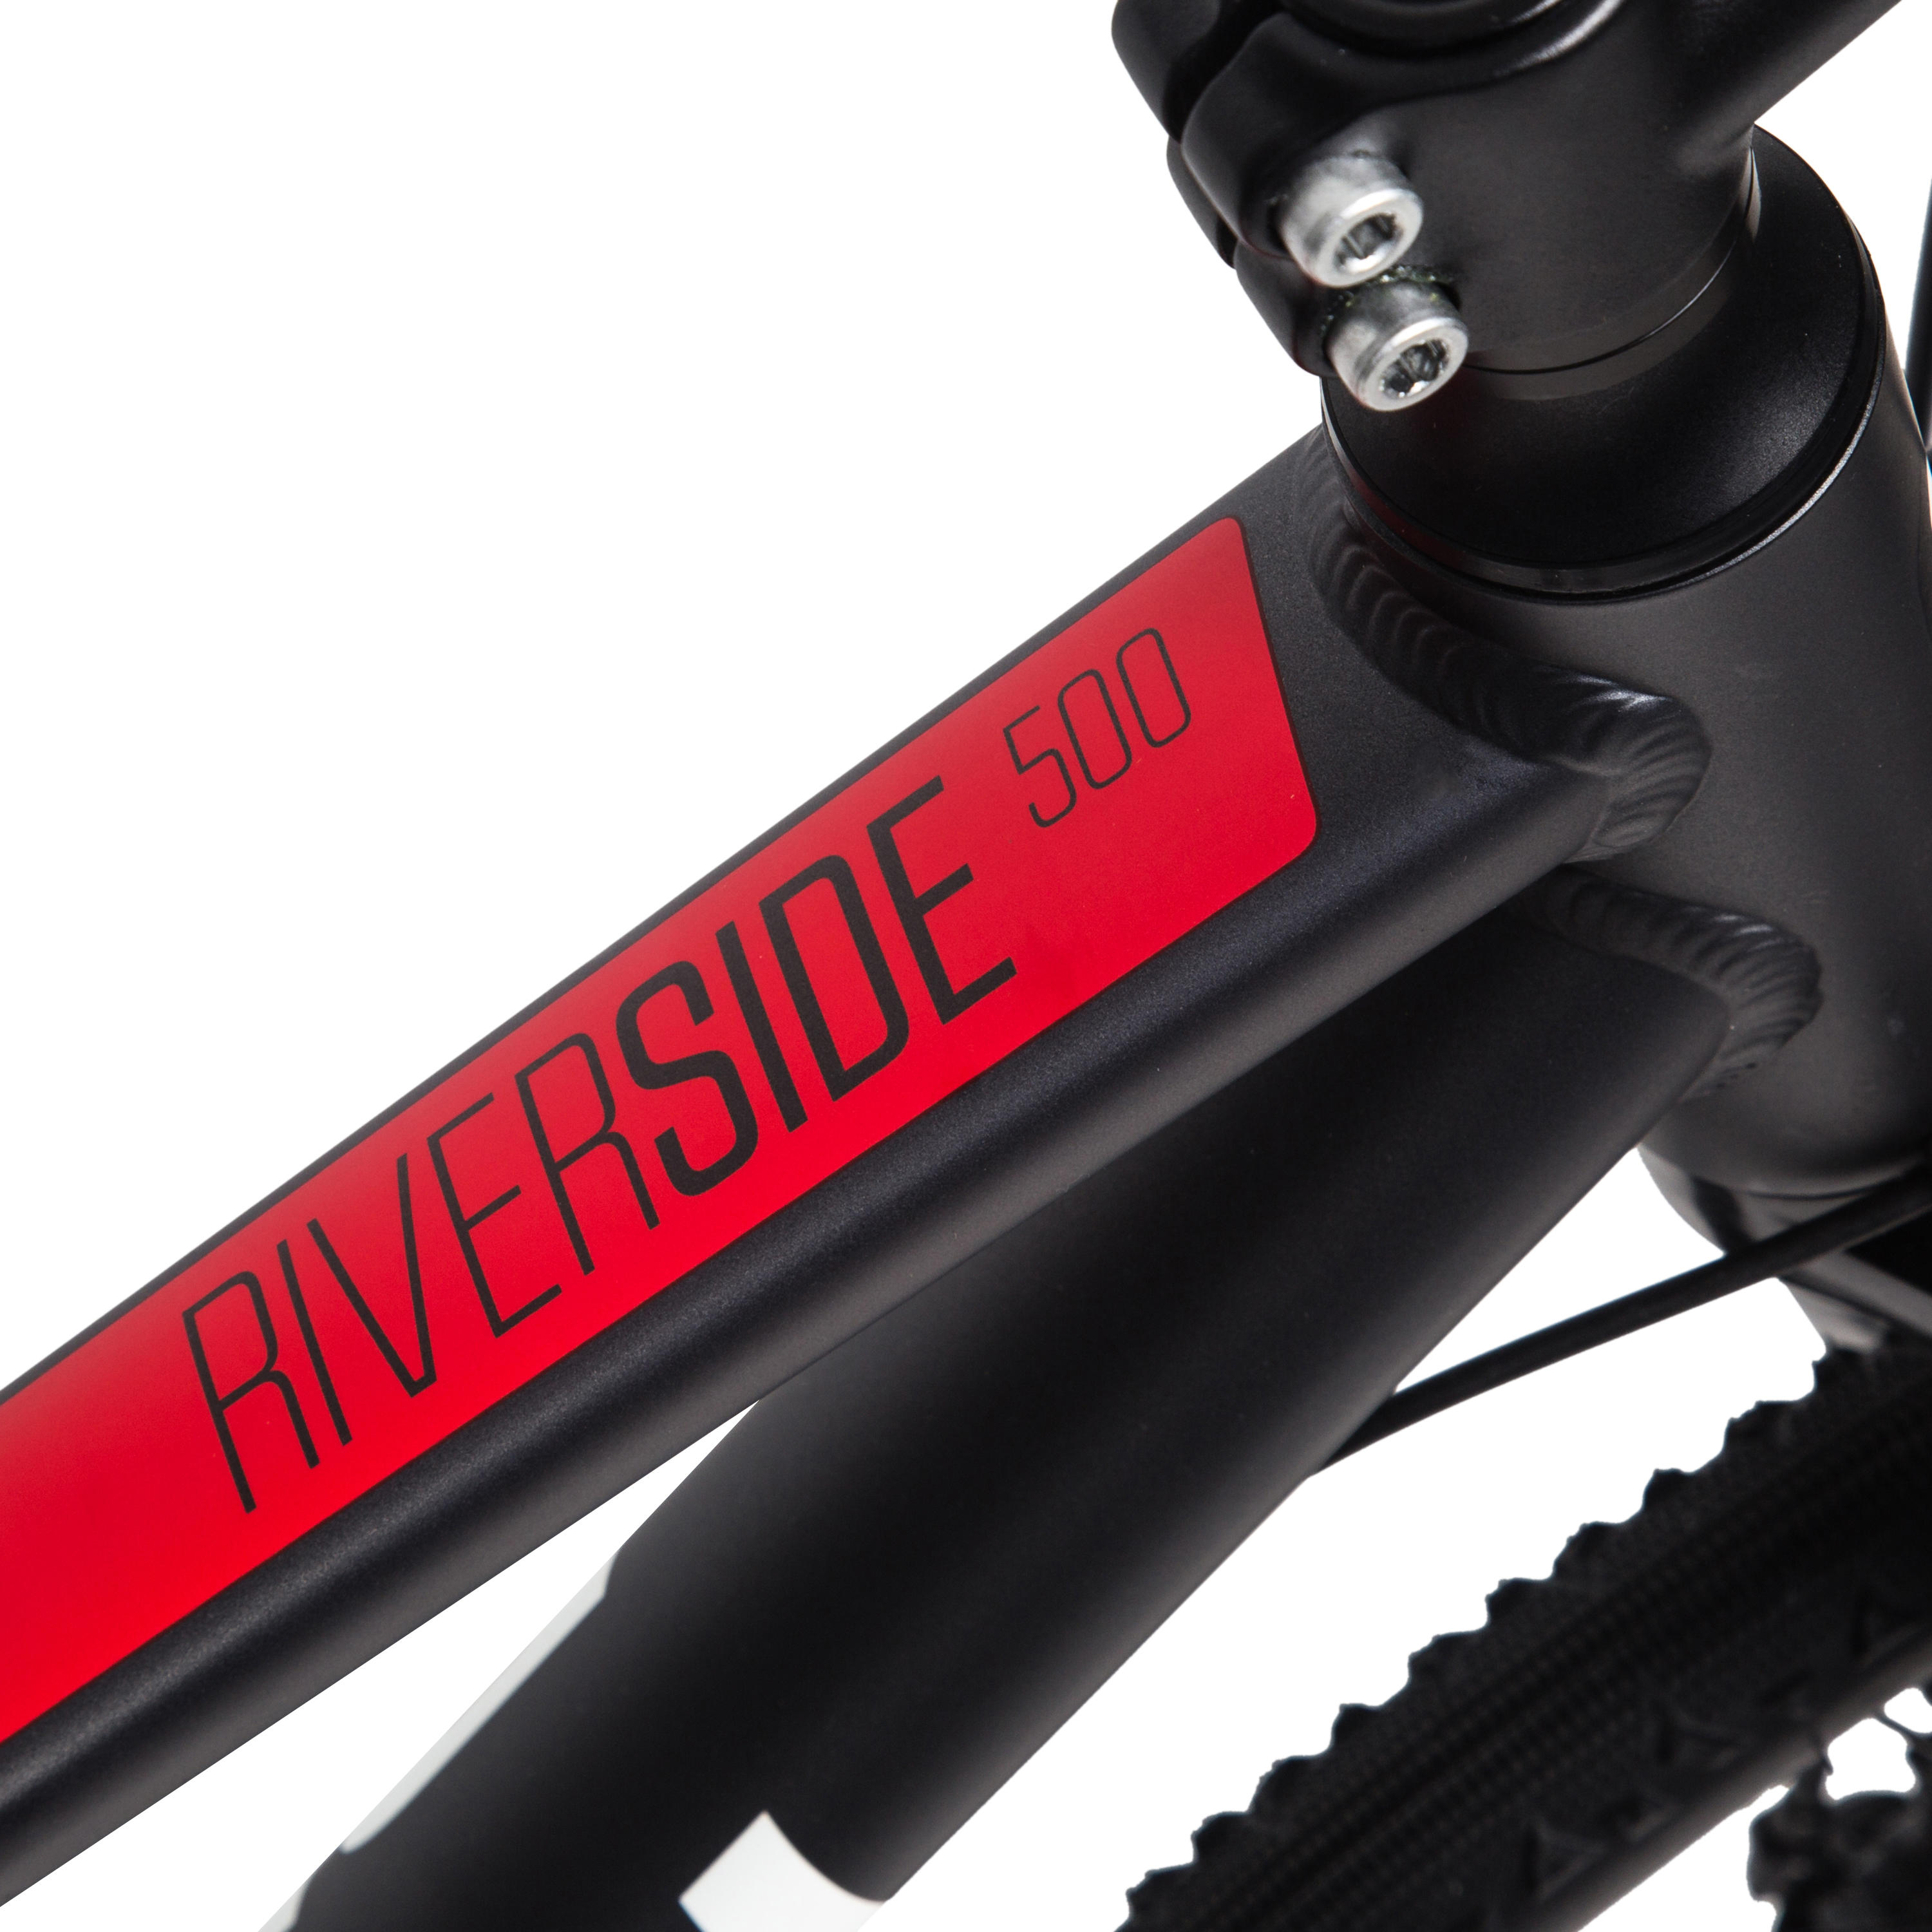 riverside 500 hybrid bike